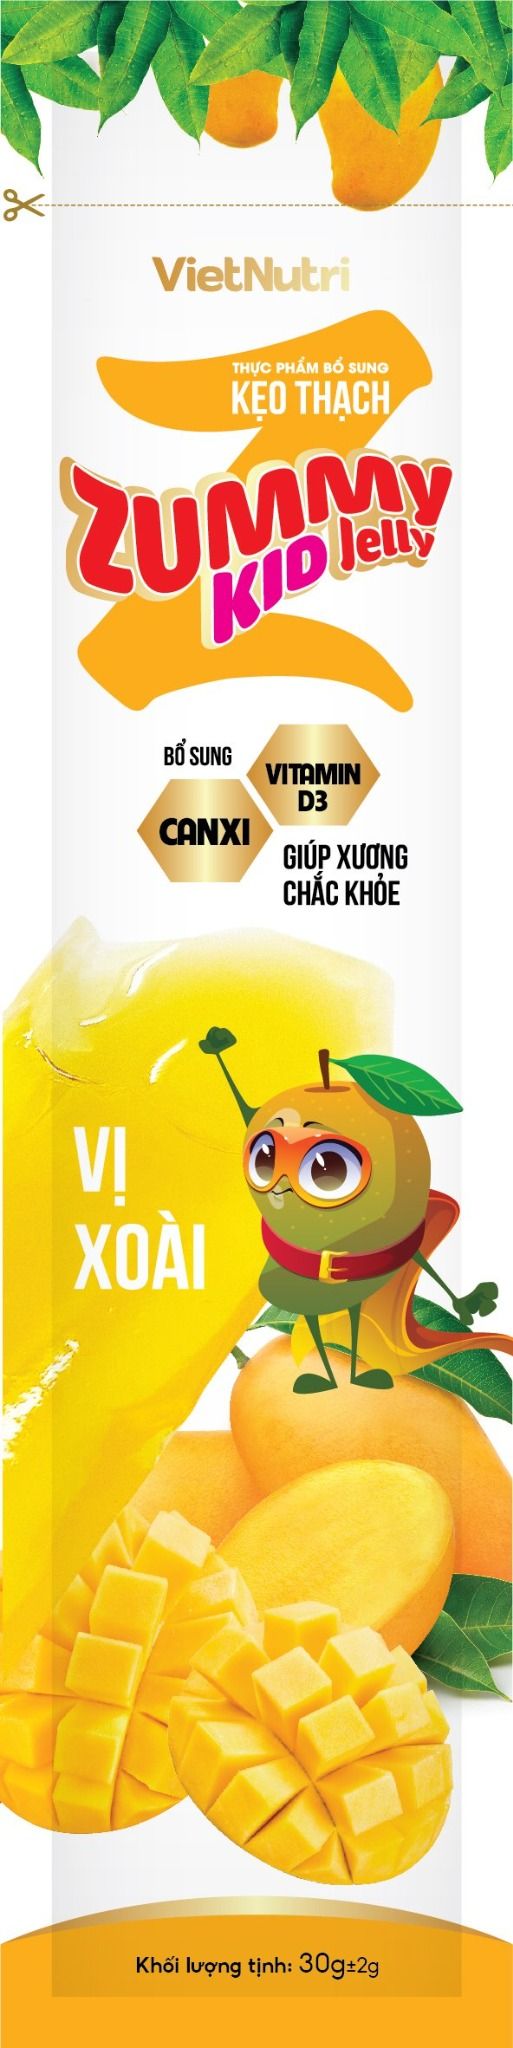  Kẹo thạch bổ sung Vitamin D3 Canxi  Zummy Kid Jelly Vị Xoài 